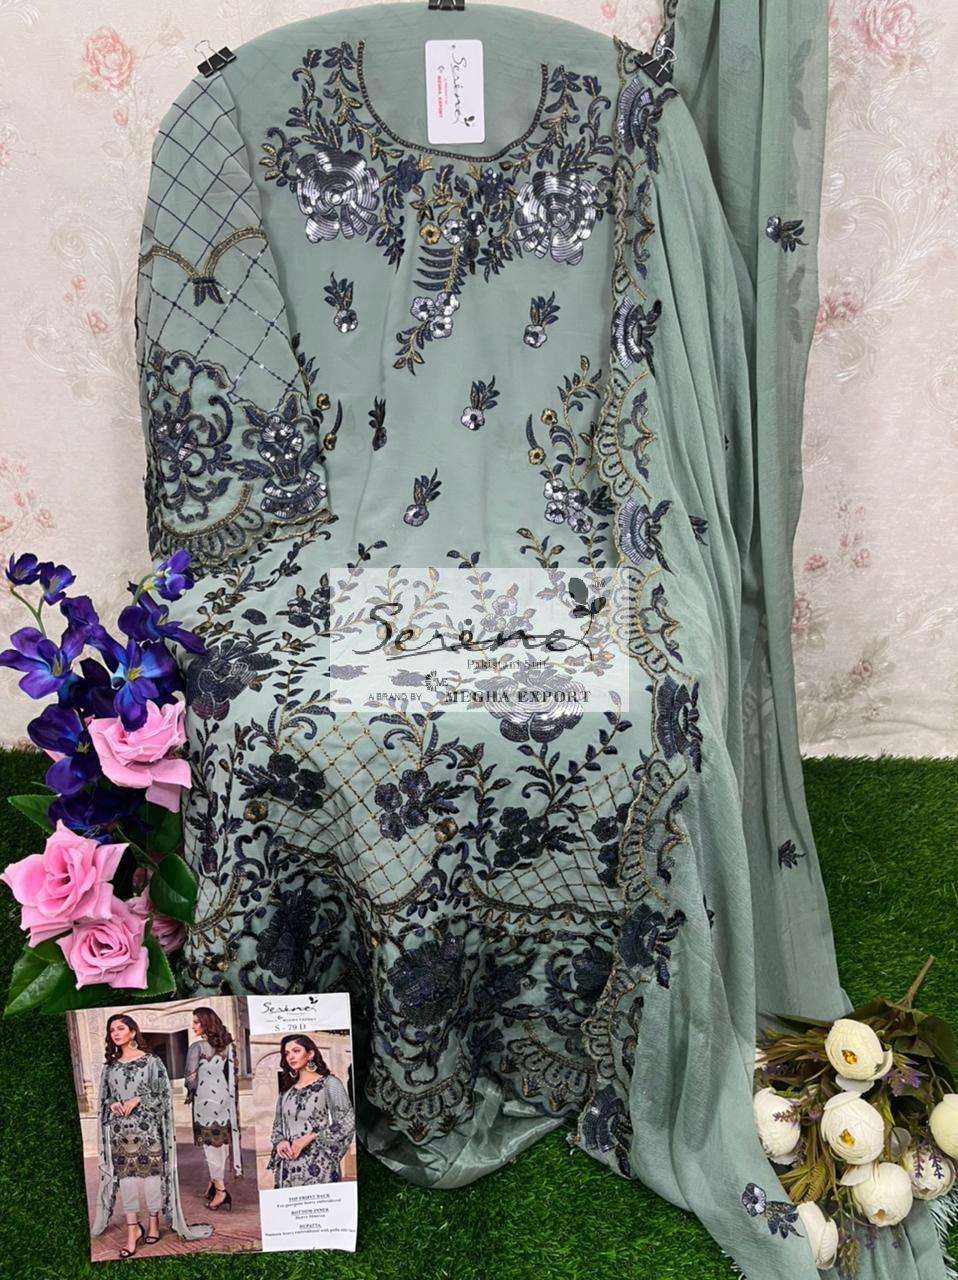 serine s-79 faux georgette pakistani salwar suits collection online price surat 